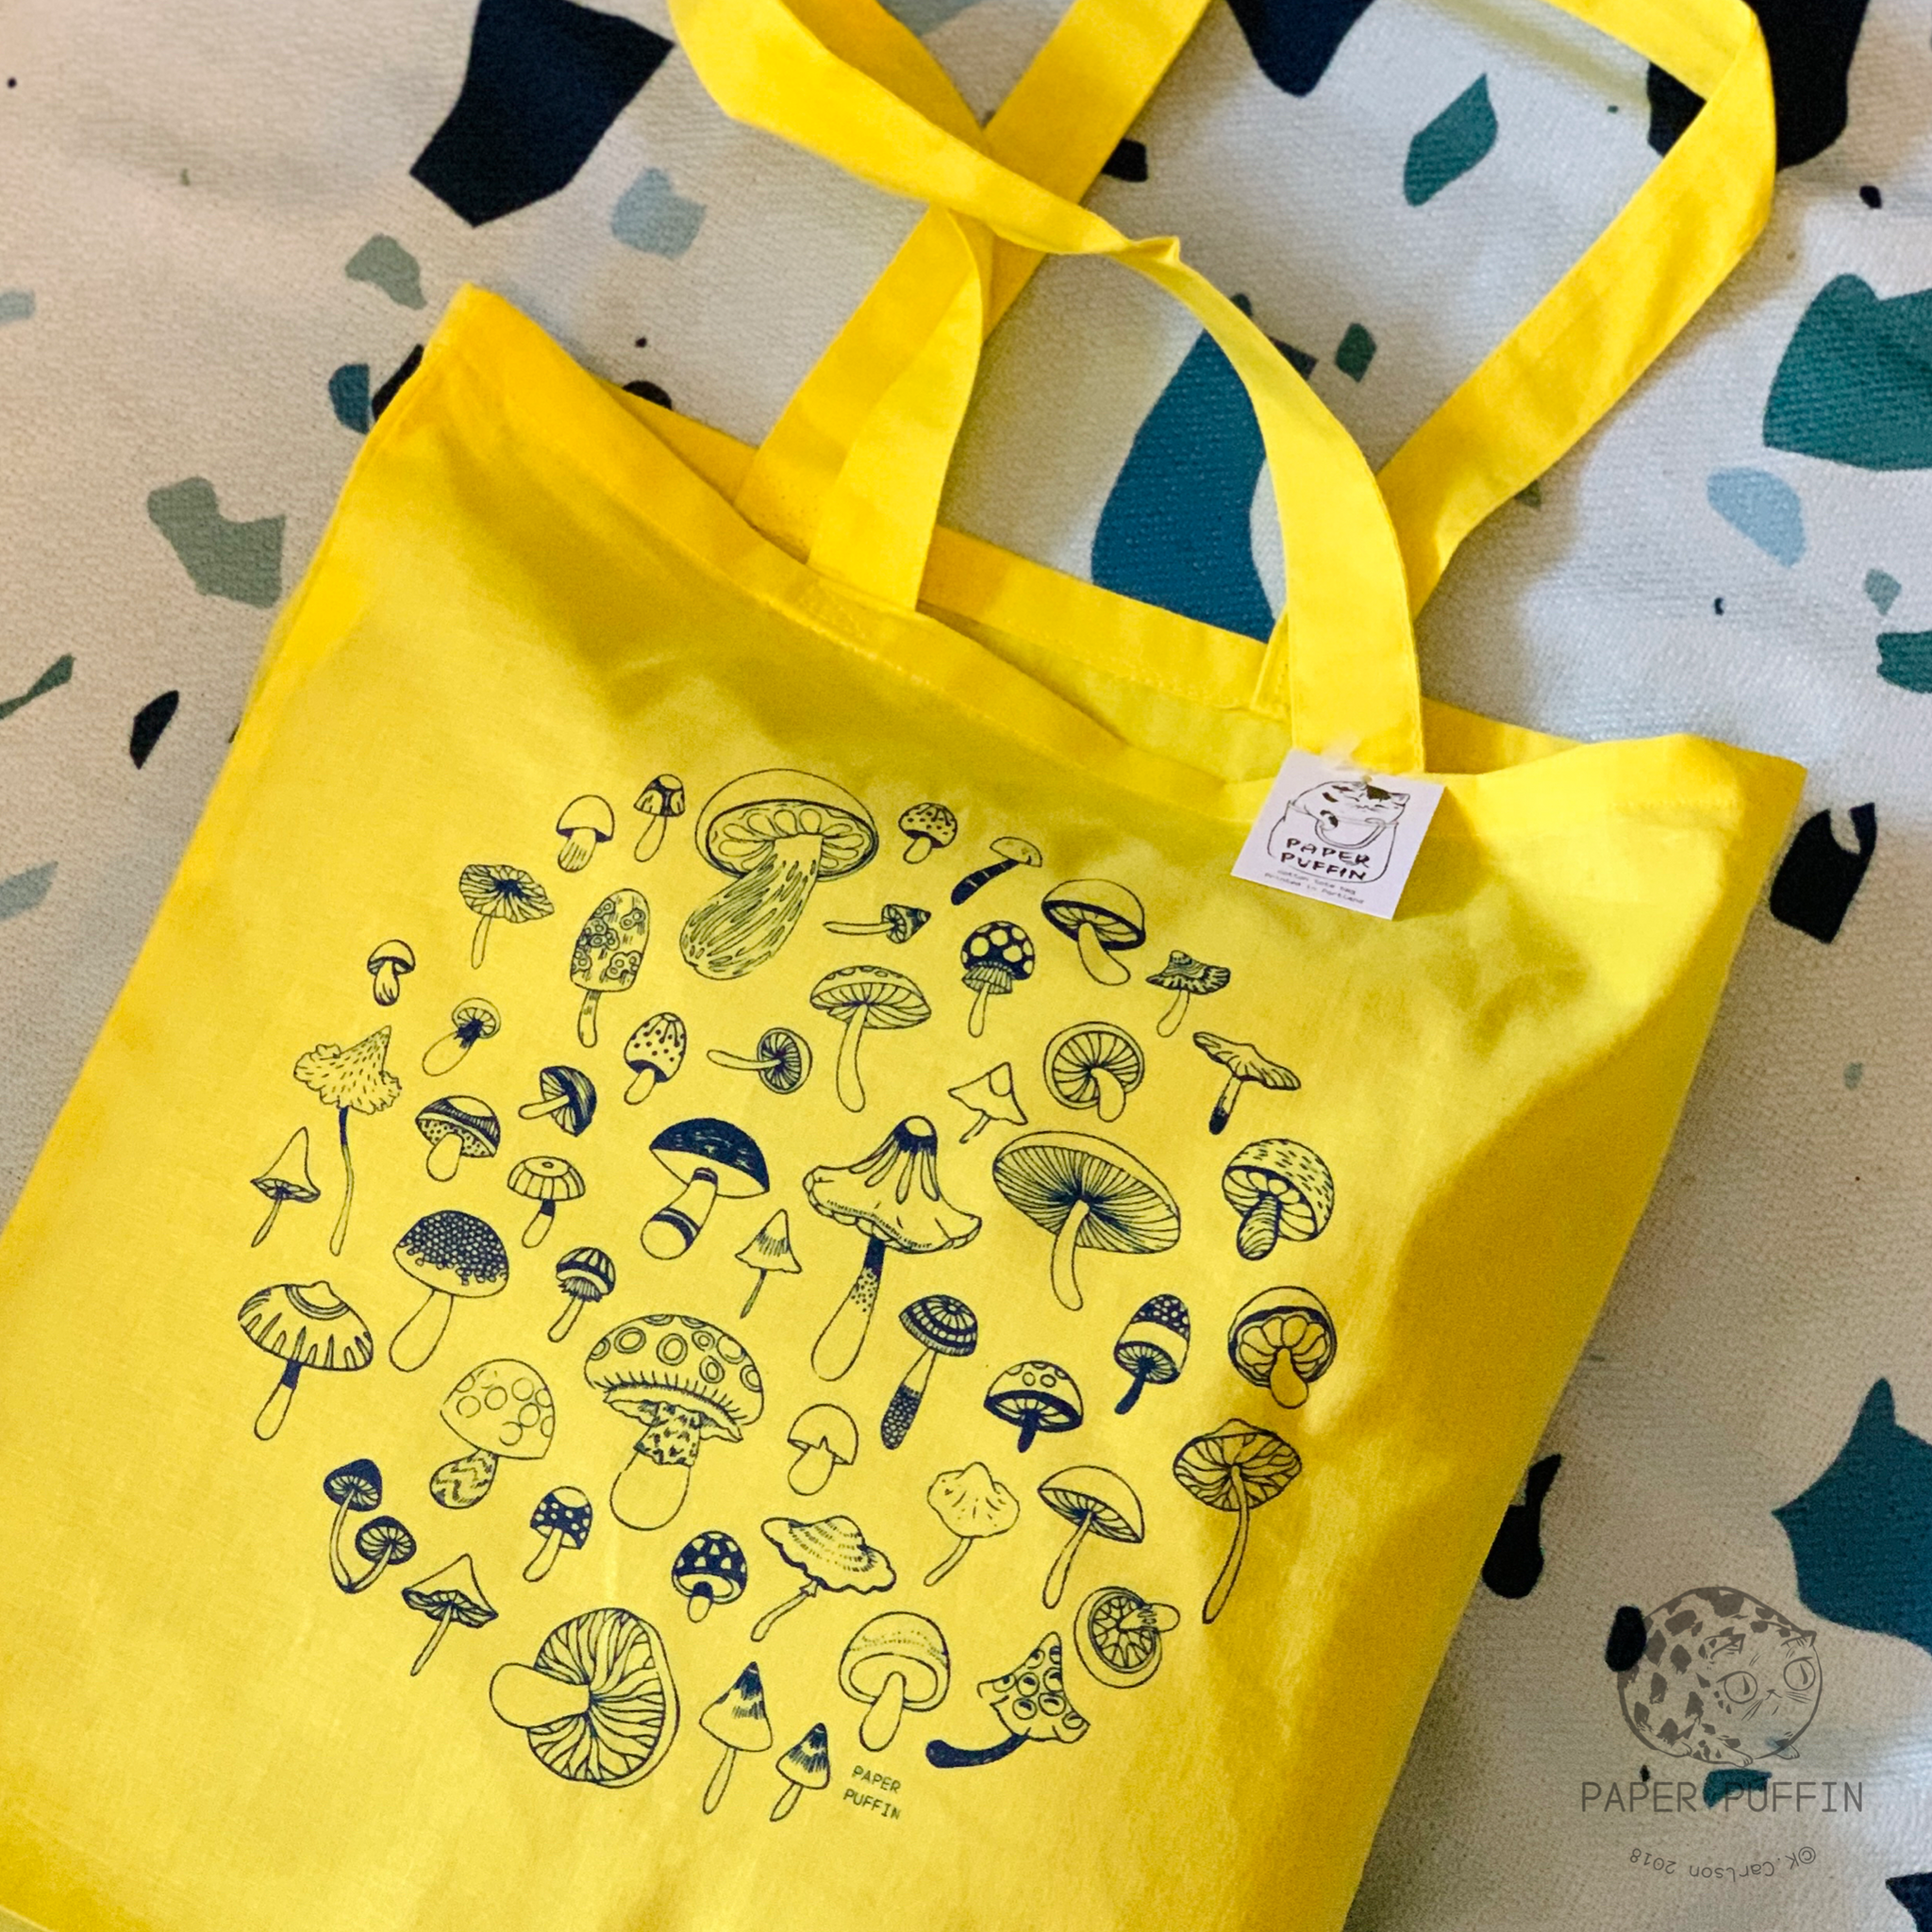 Mushroom Circle Tote Bag - Limited Edition Yellow